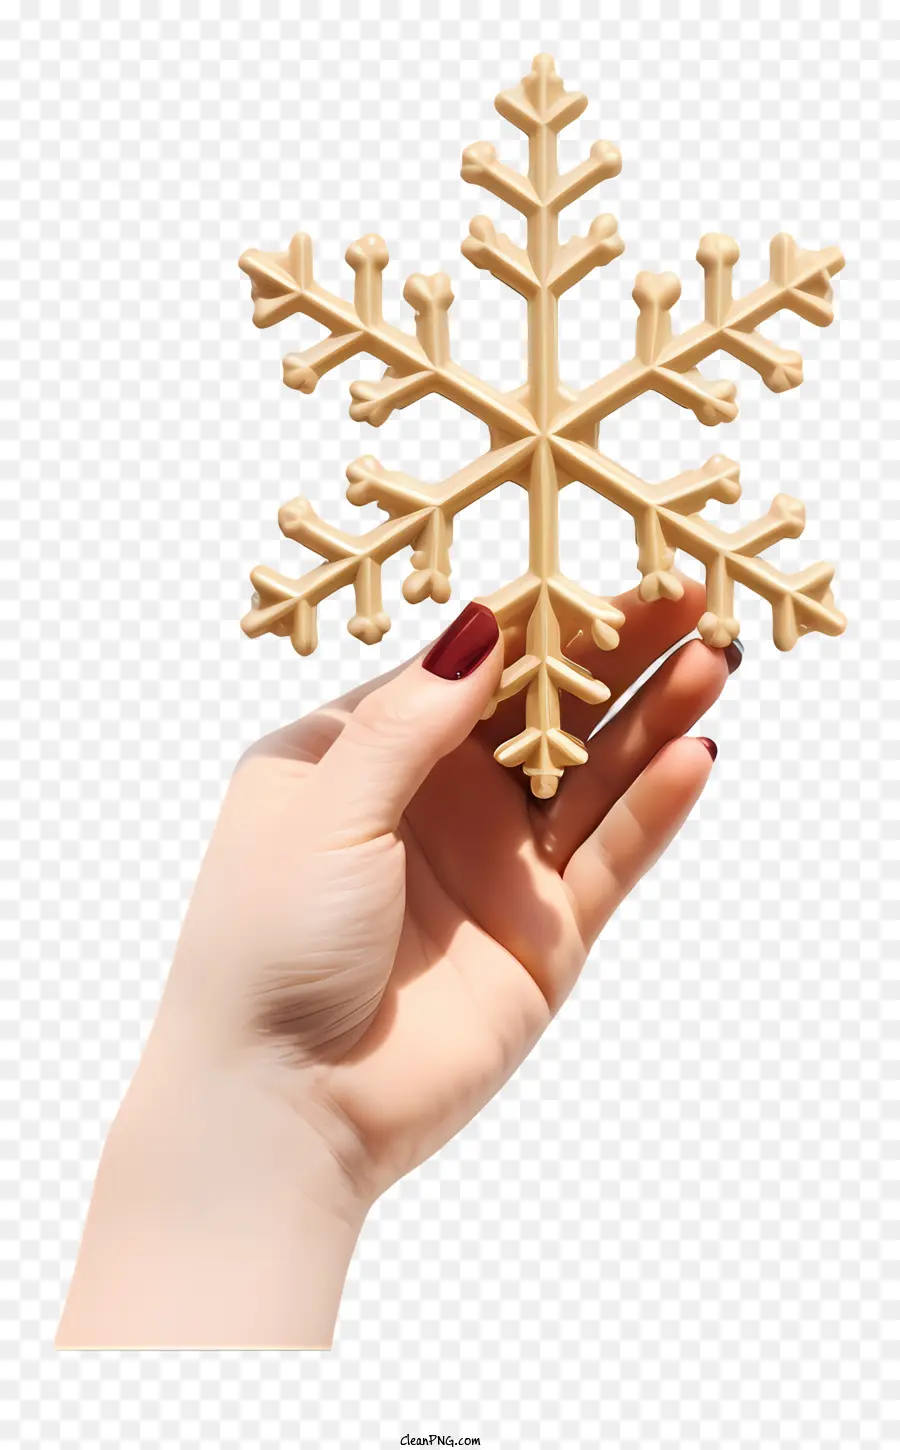 Schneeflocke - Frau Hand hält goldene Metallschneeflake